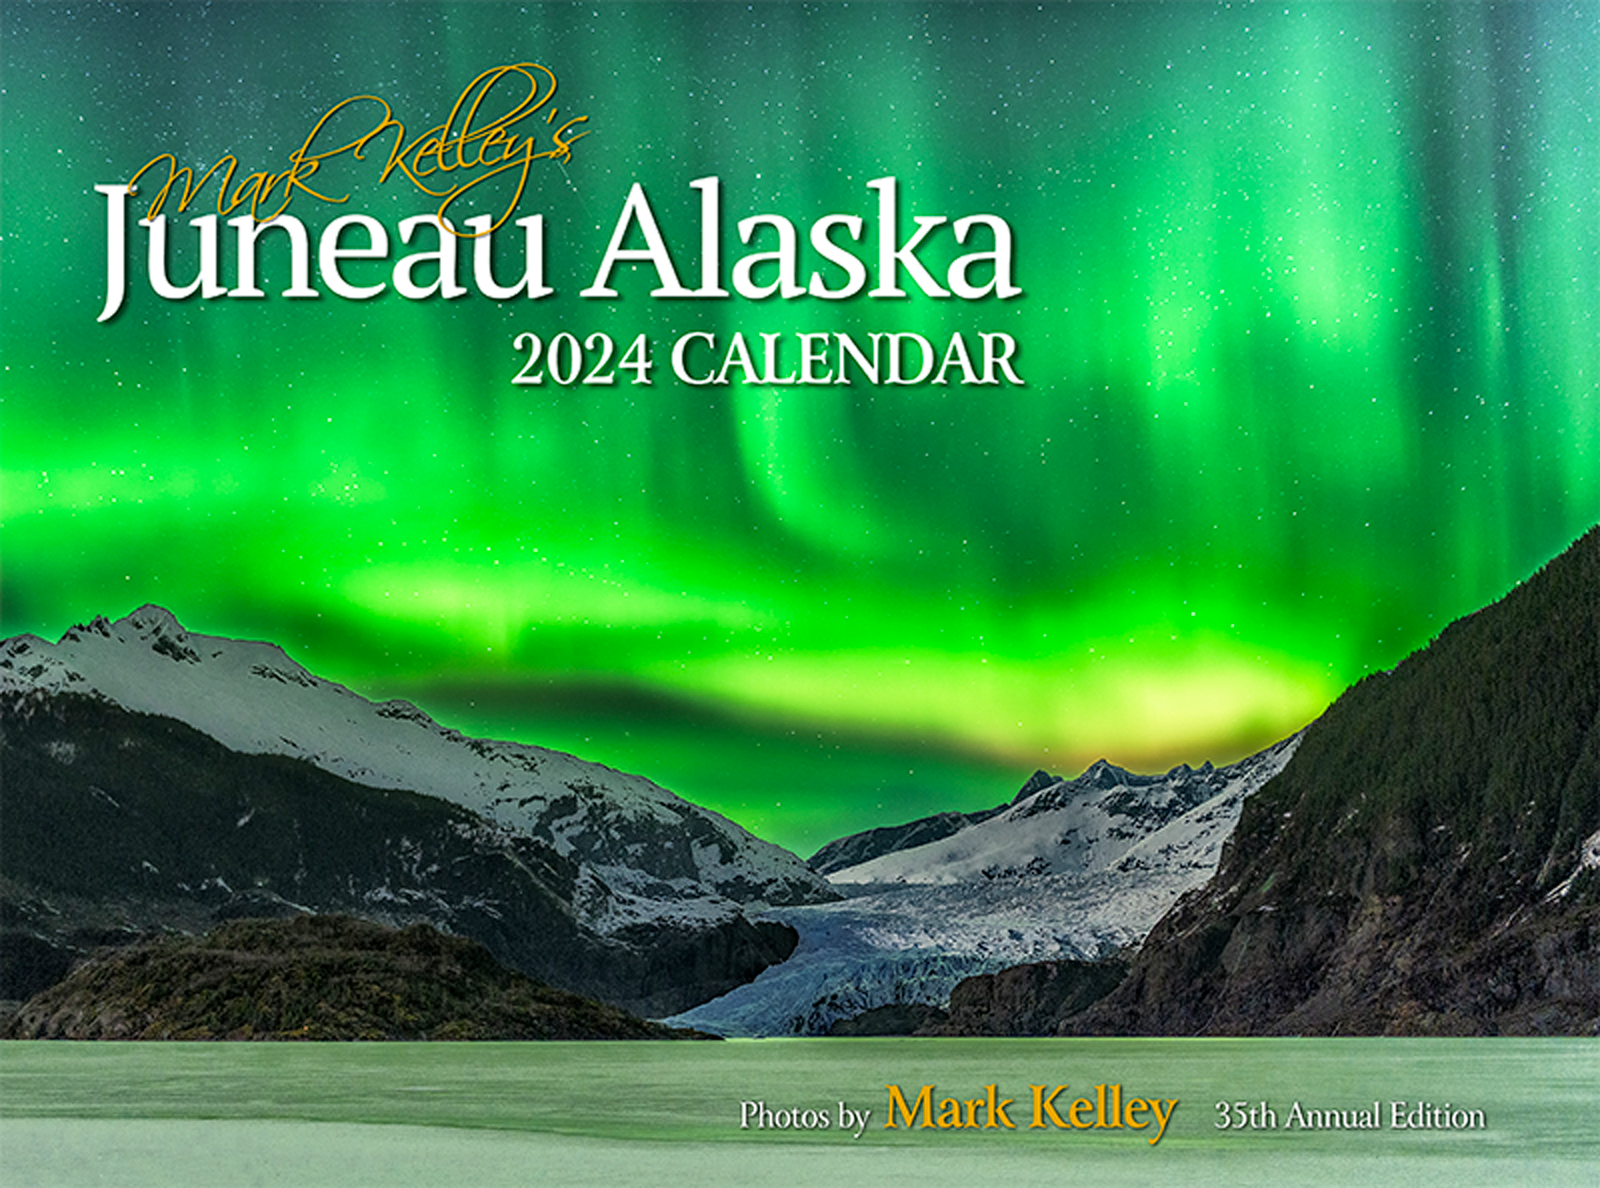 Northern Lights, Juneau, Alaska Image 2899 Mark Kelley